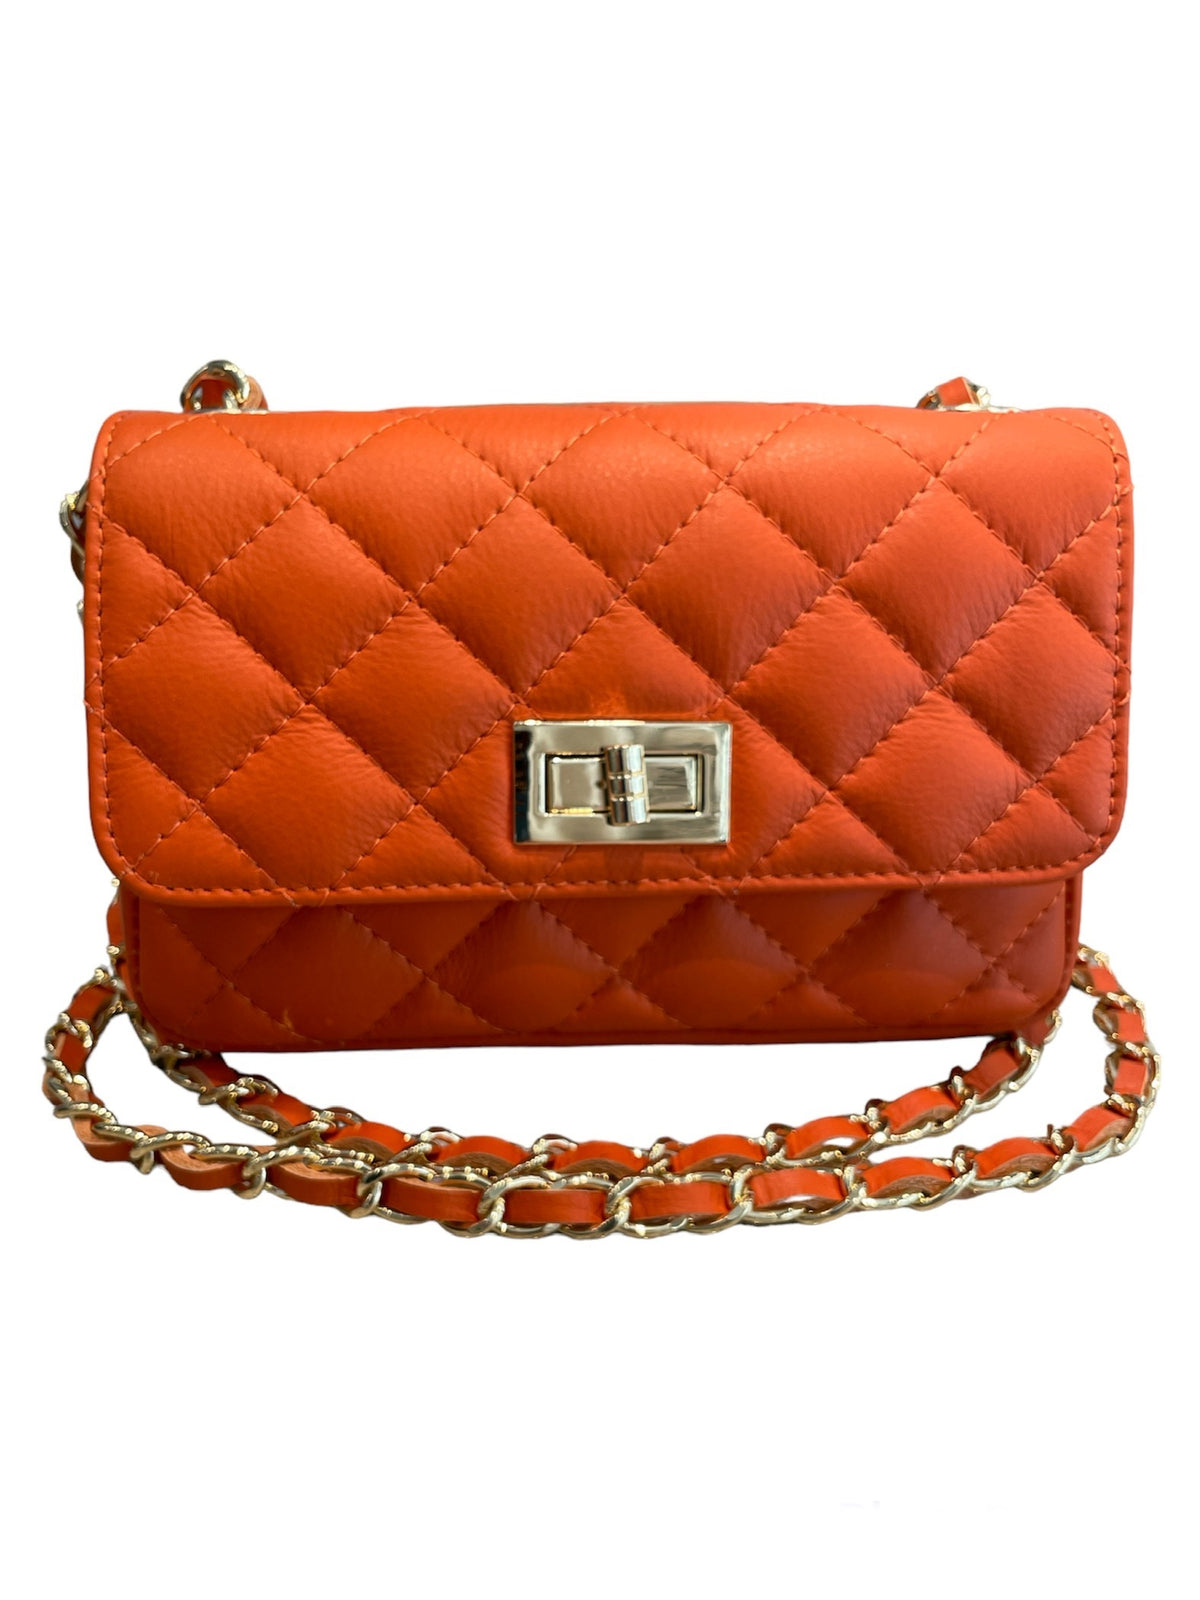 Double Chain Leather Handbag